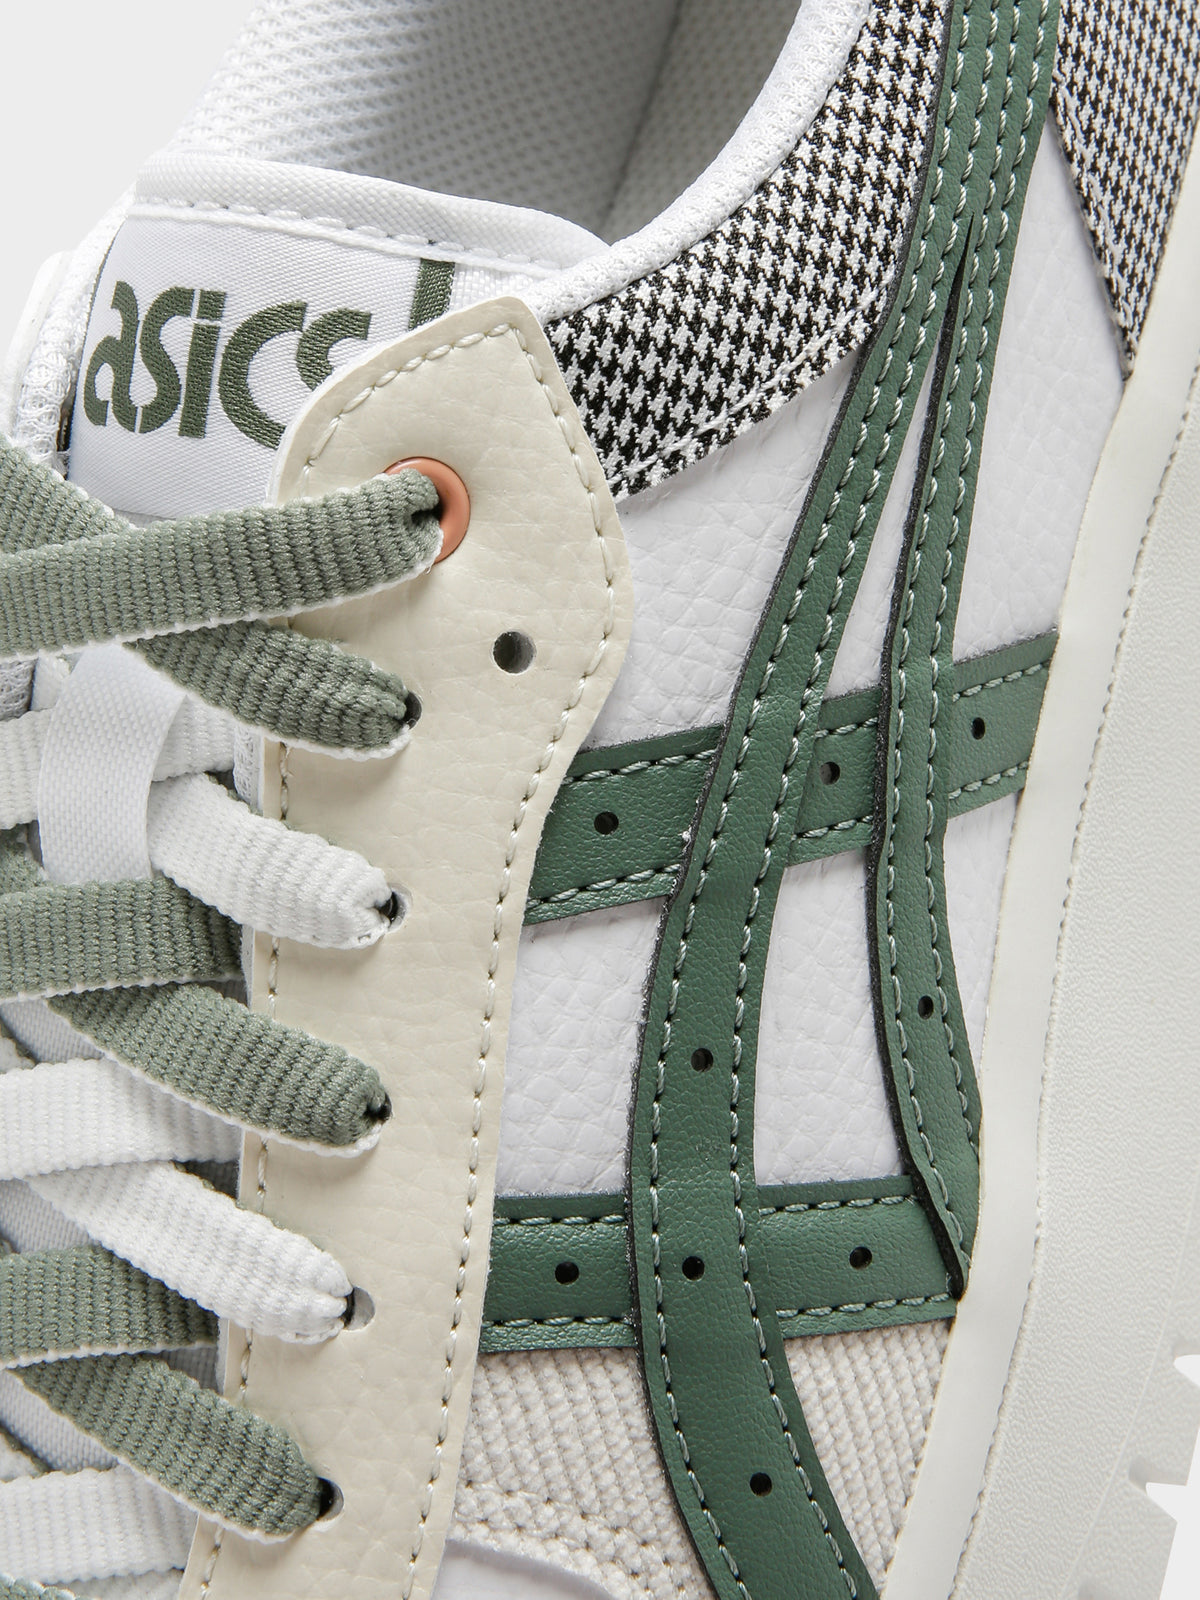 Asics Womens Japan S Platform Sneakers in White & Beige | White/Beig